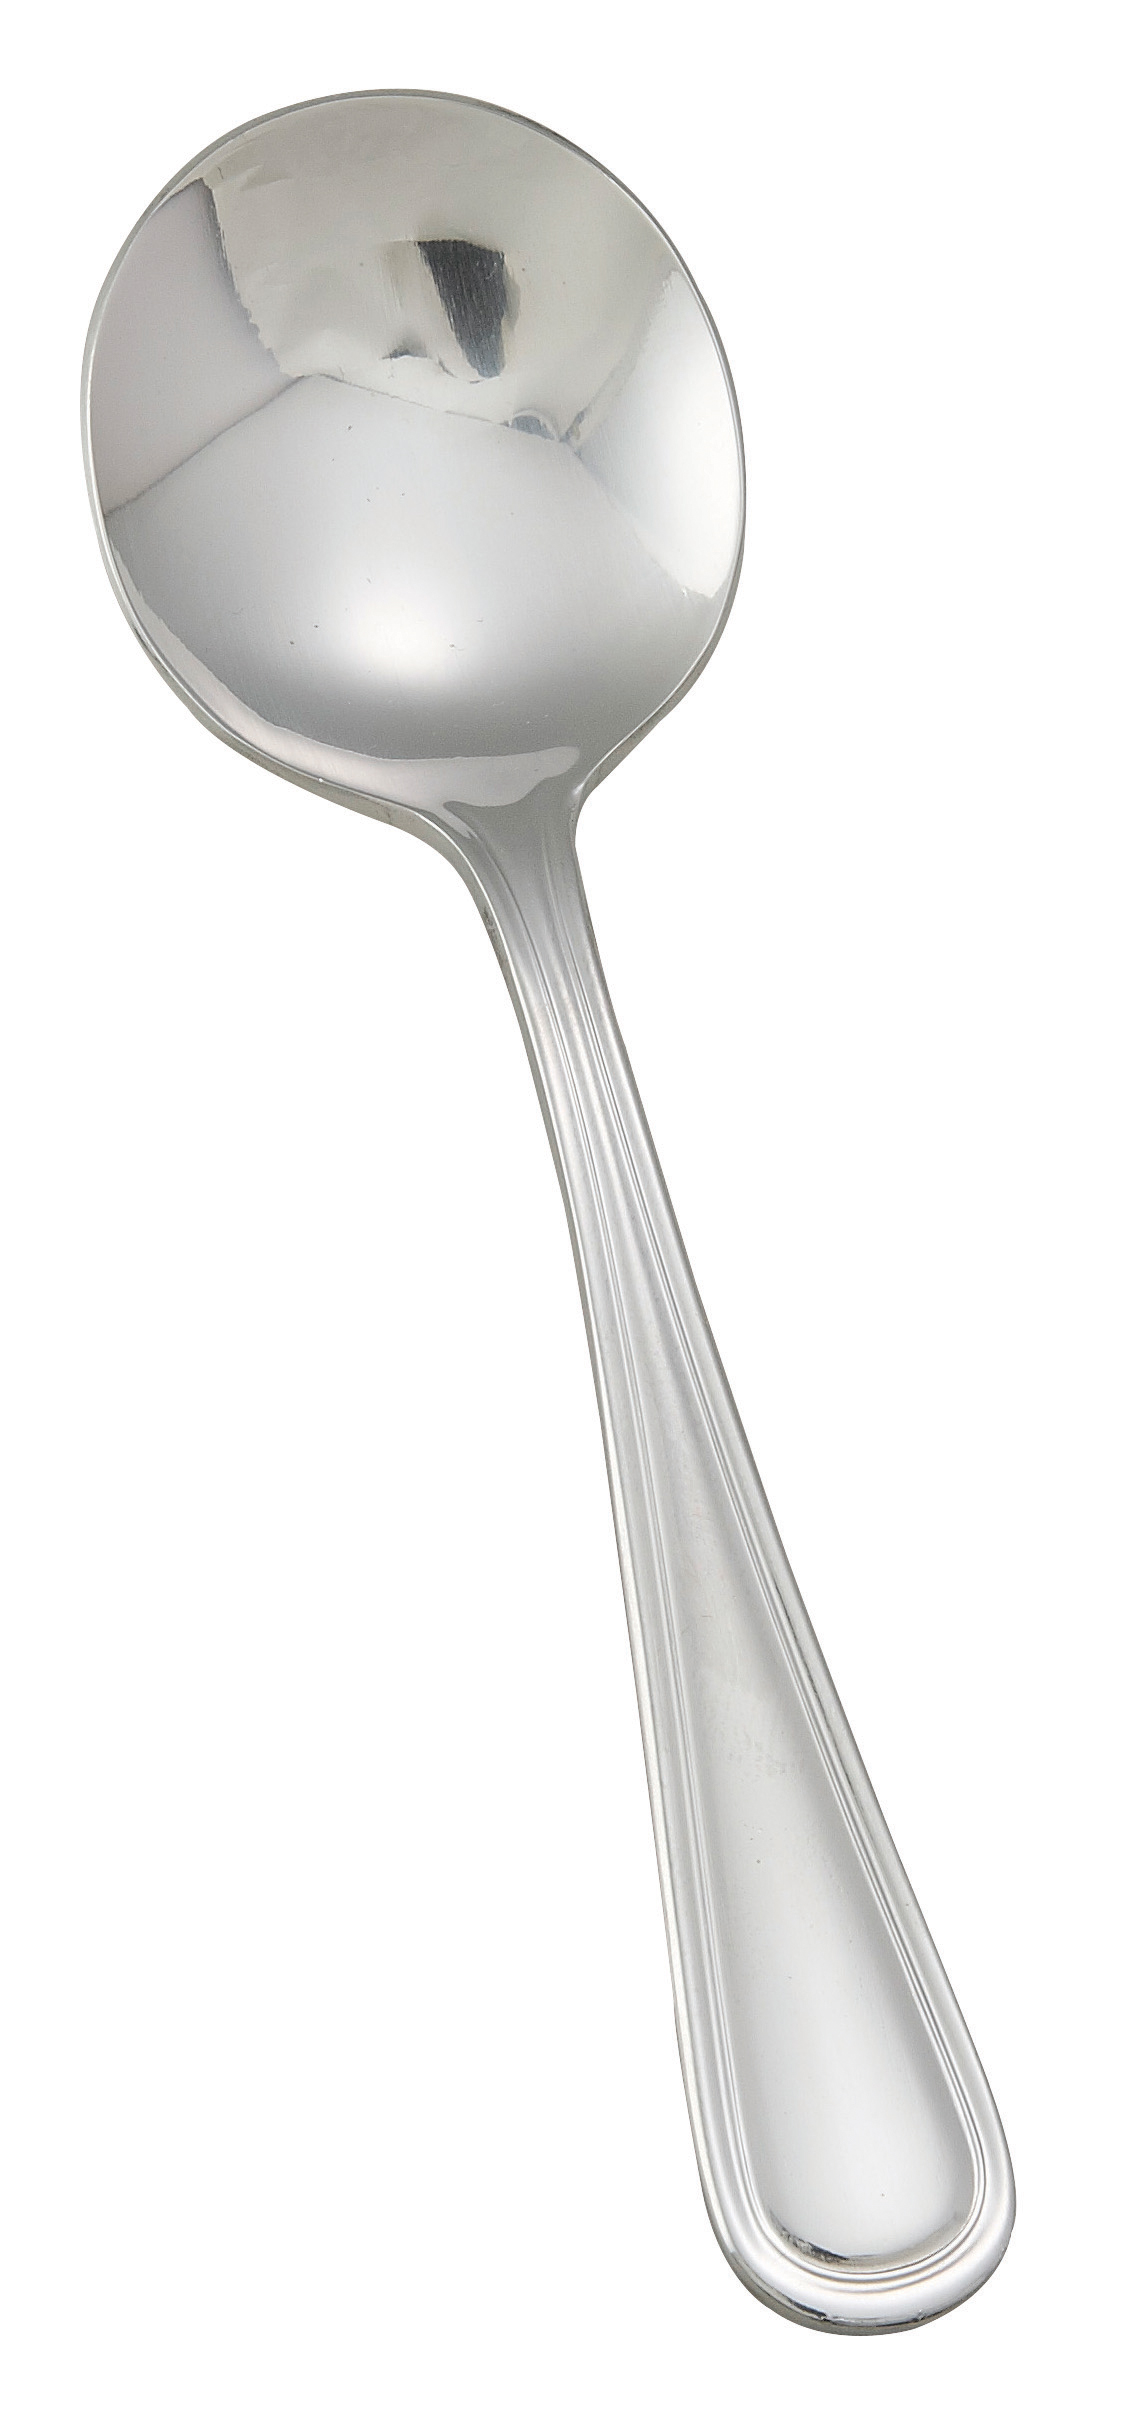 Bouillon Spoon, 18/0 stainless steel, extra heavy,